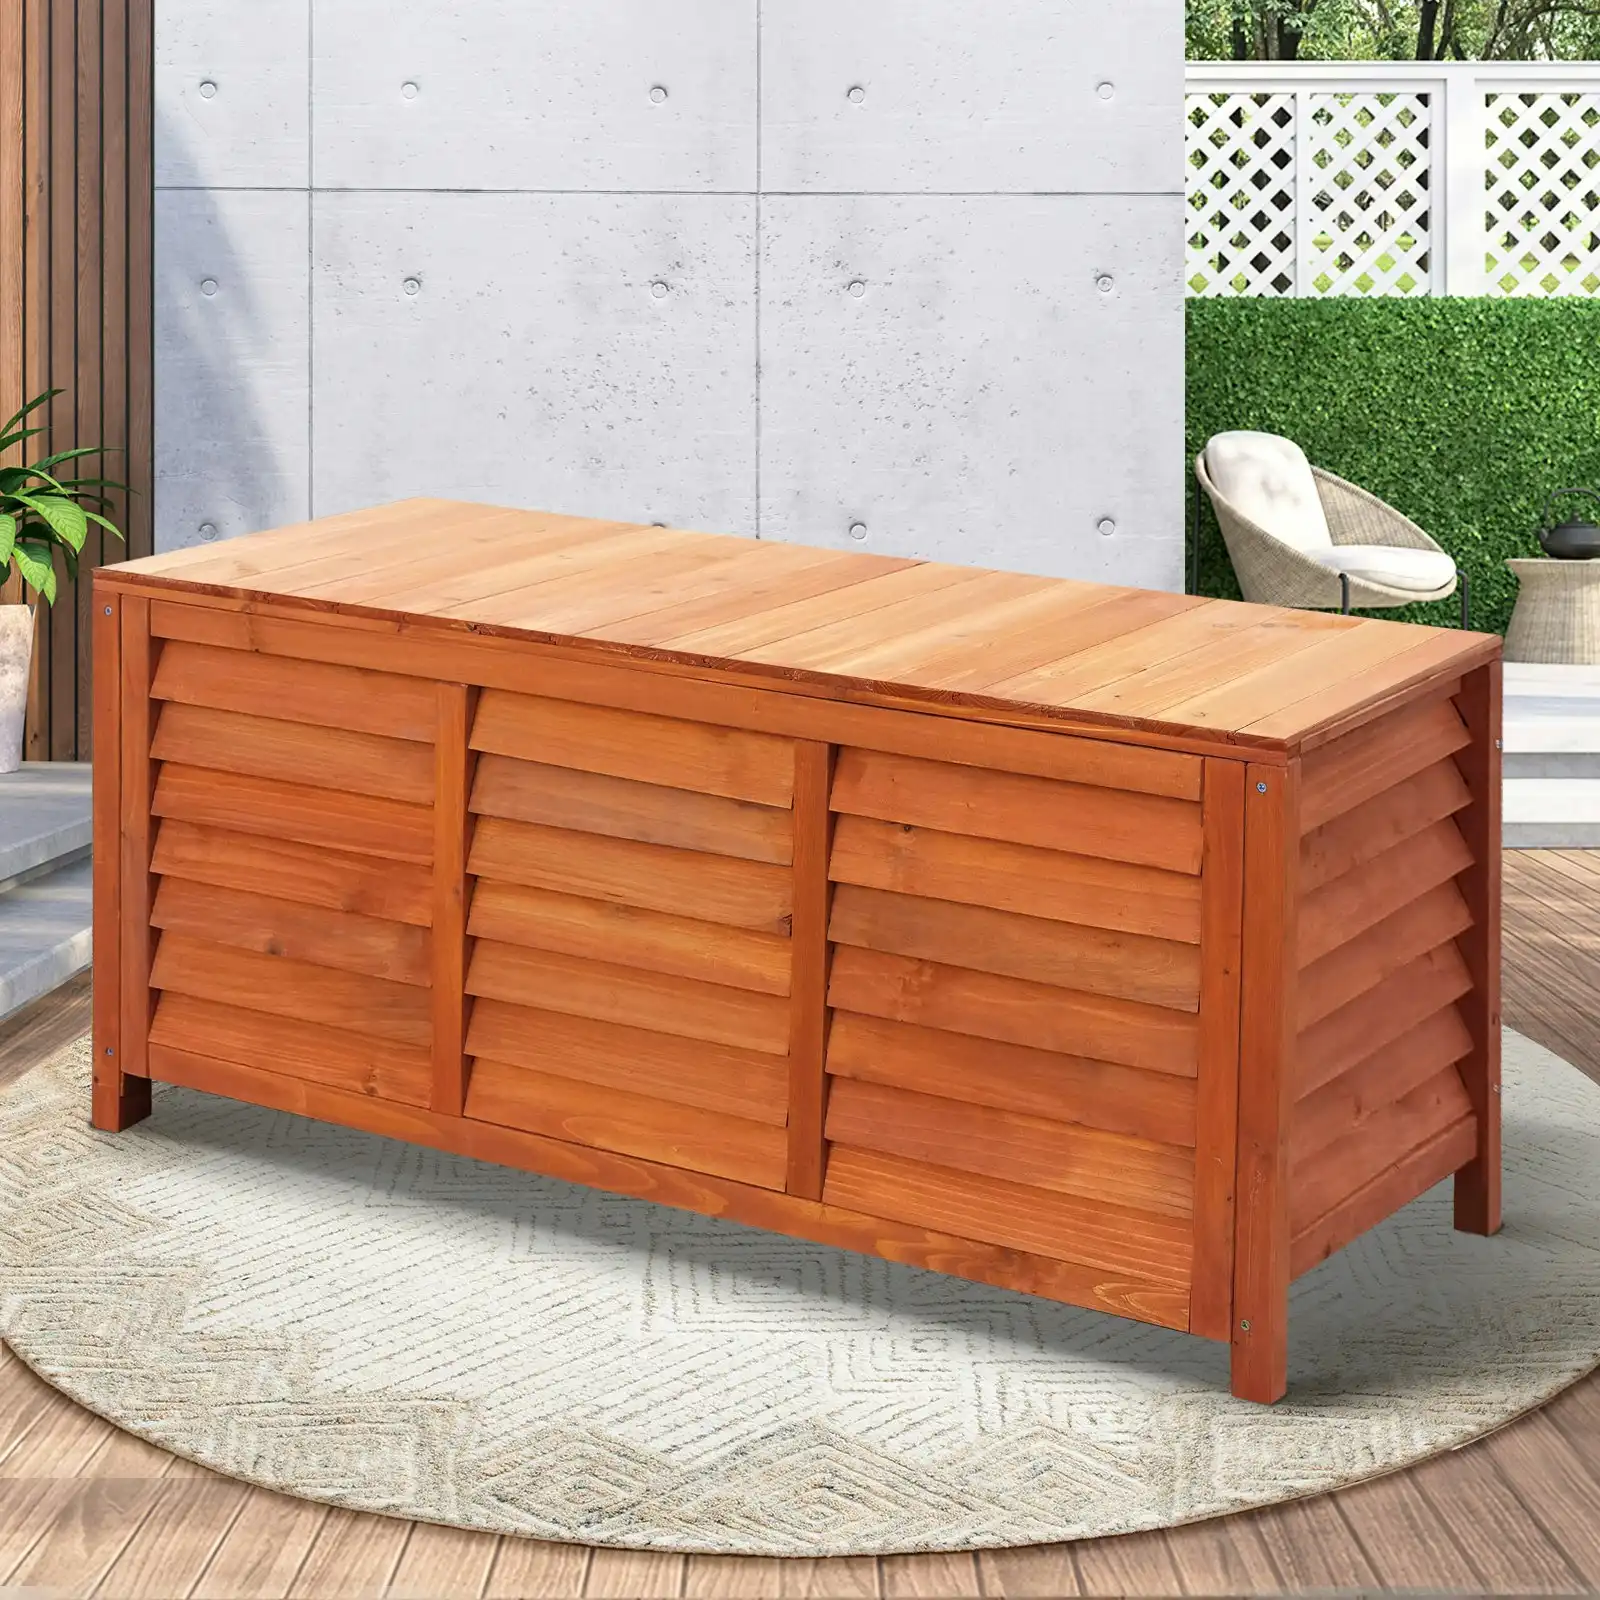 Livsip Outdoor Storage Box Garden Bench Wooden Chest Toy Tool Chair Furniture